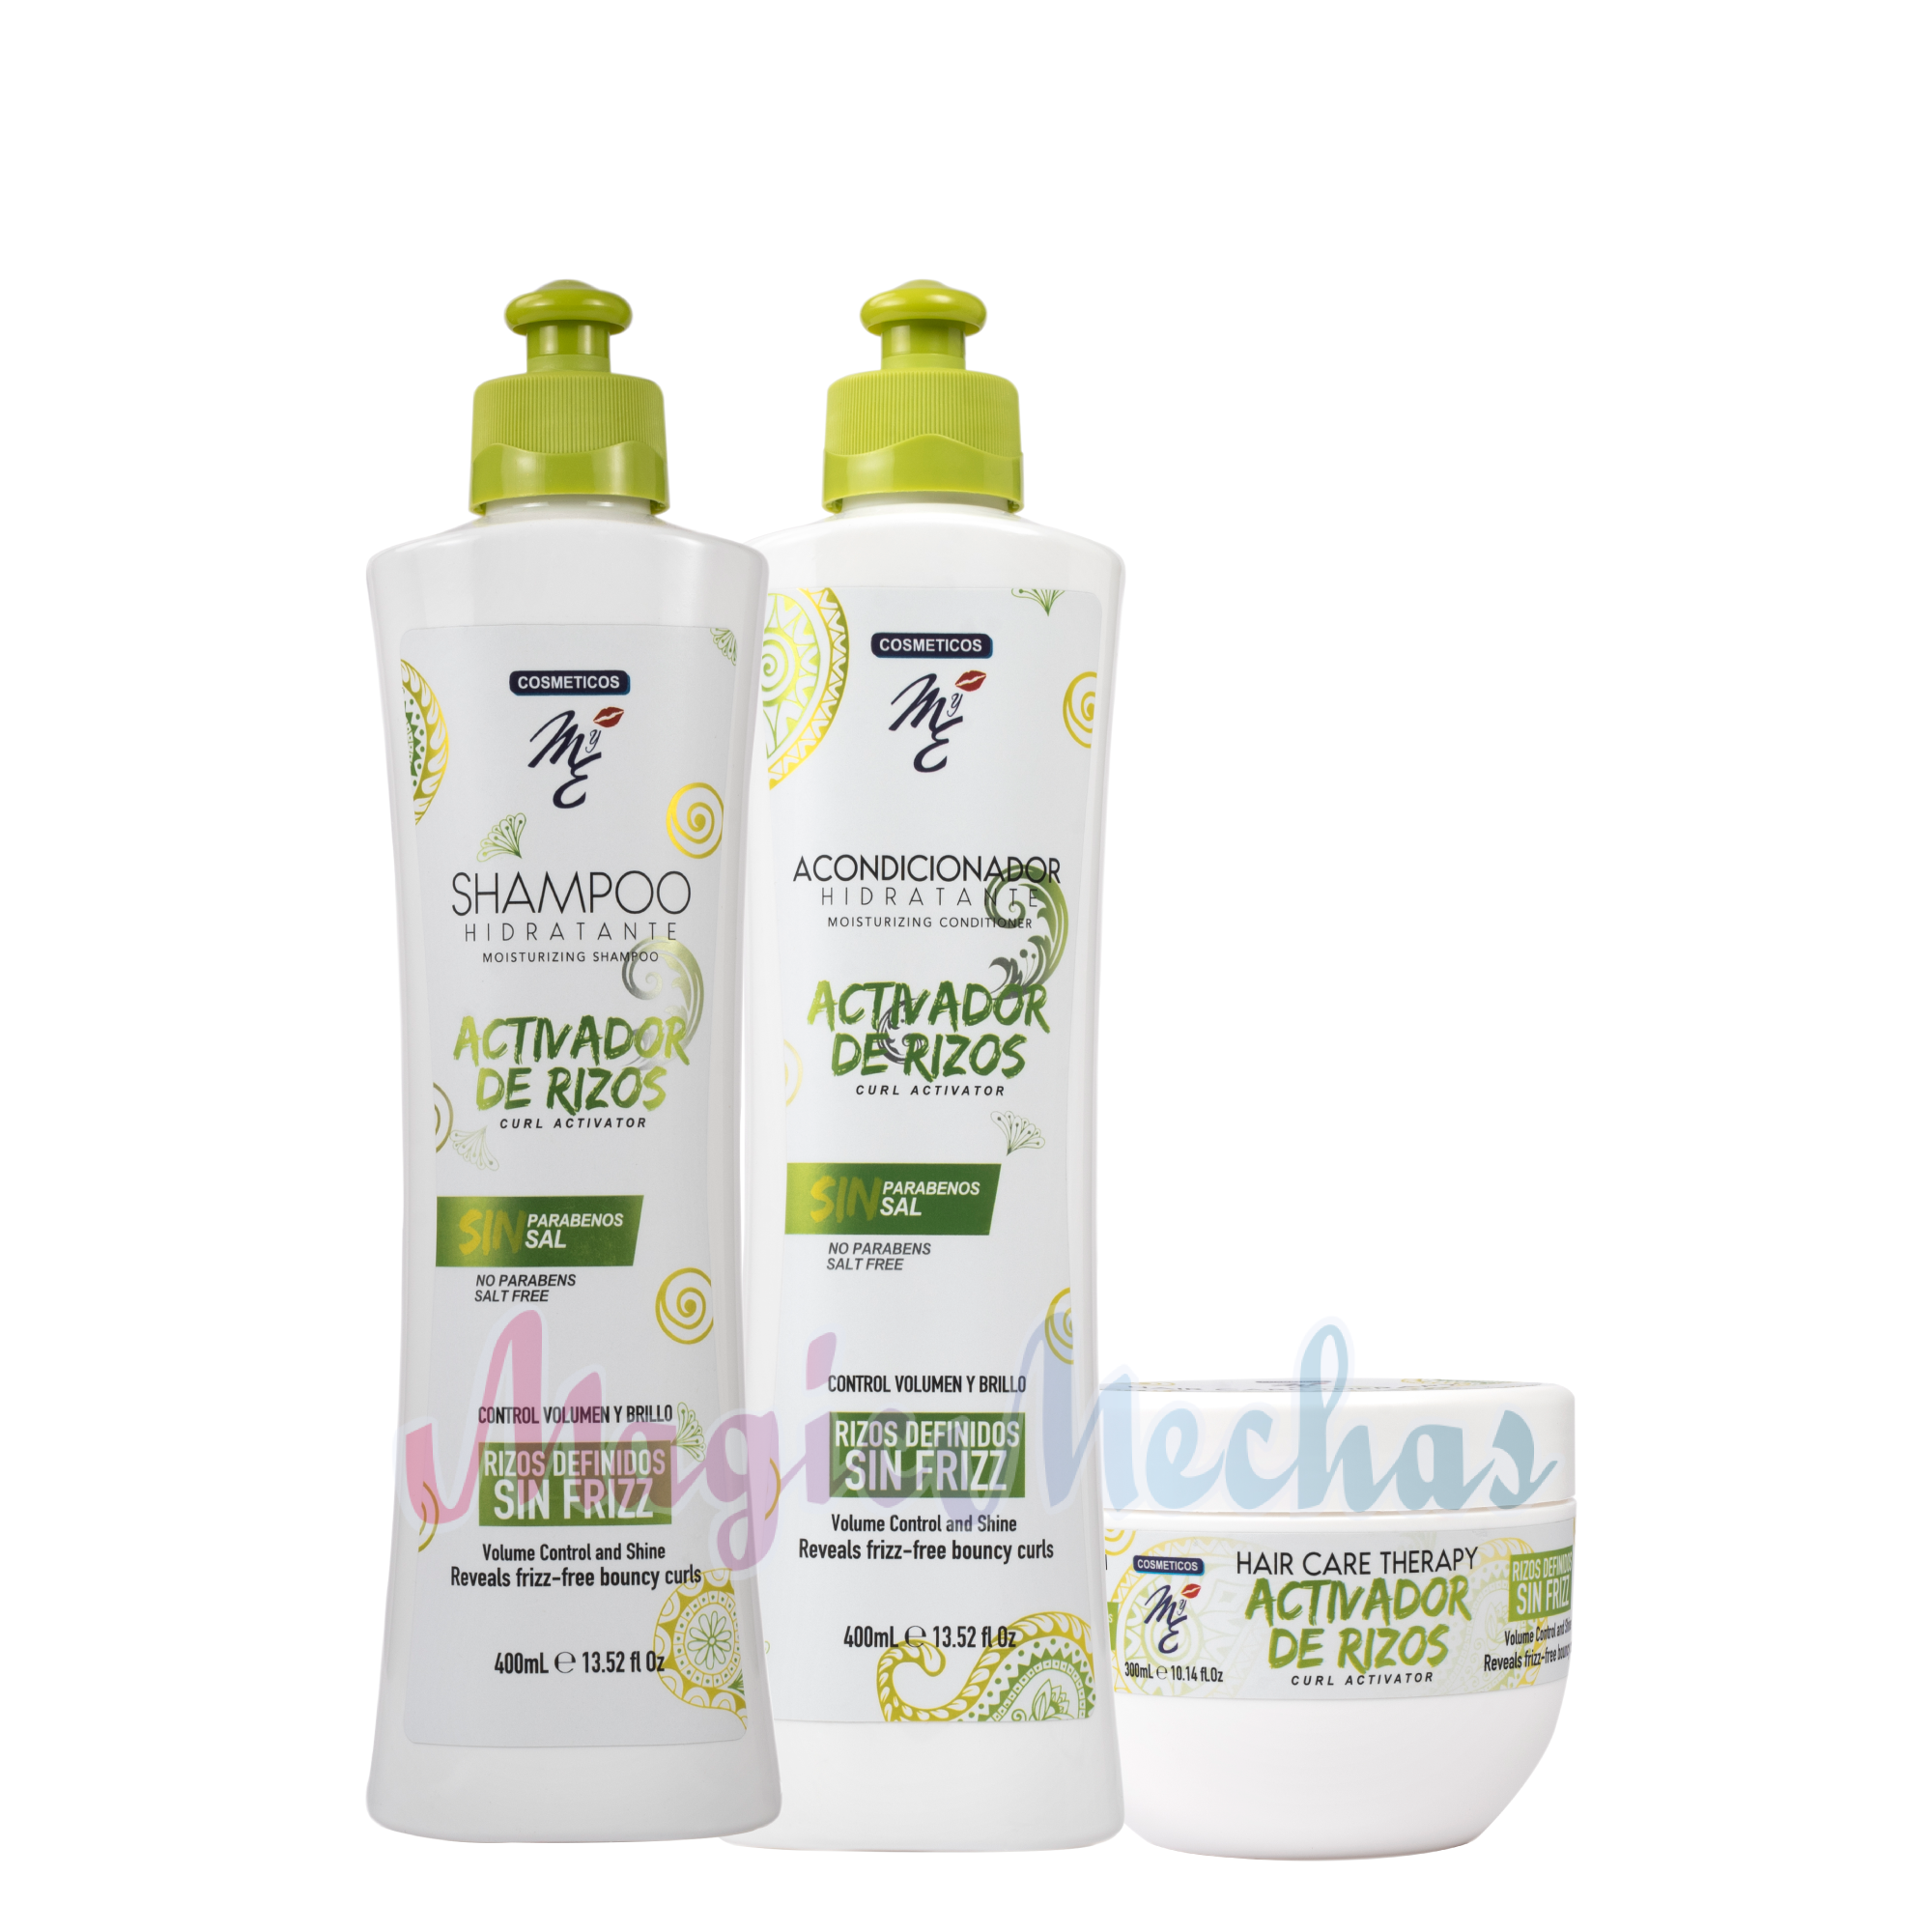 Kit MyE Activador De Rizos Shampoo + Acondicionador + Tratamiento MYE